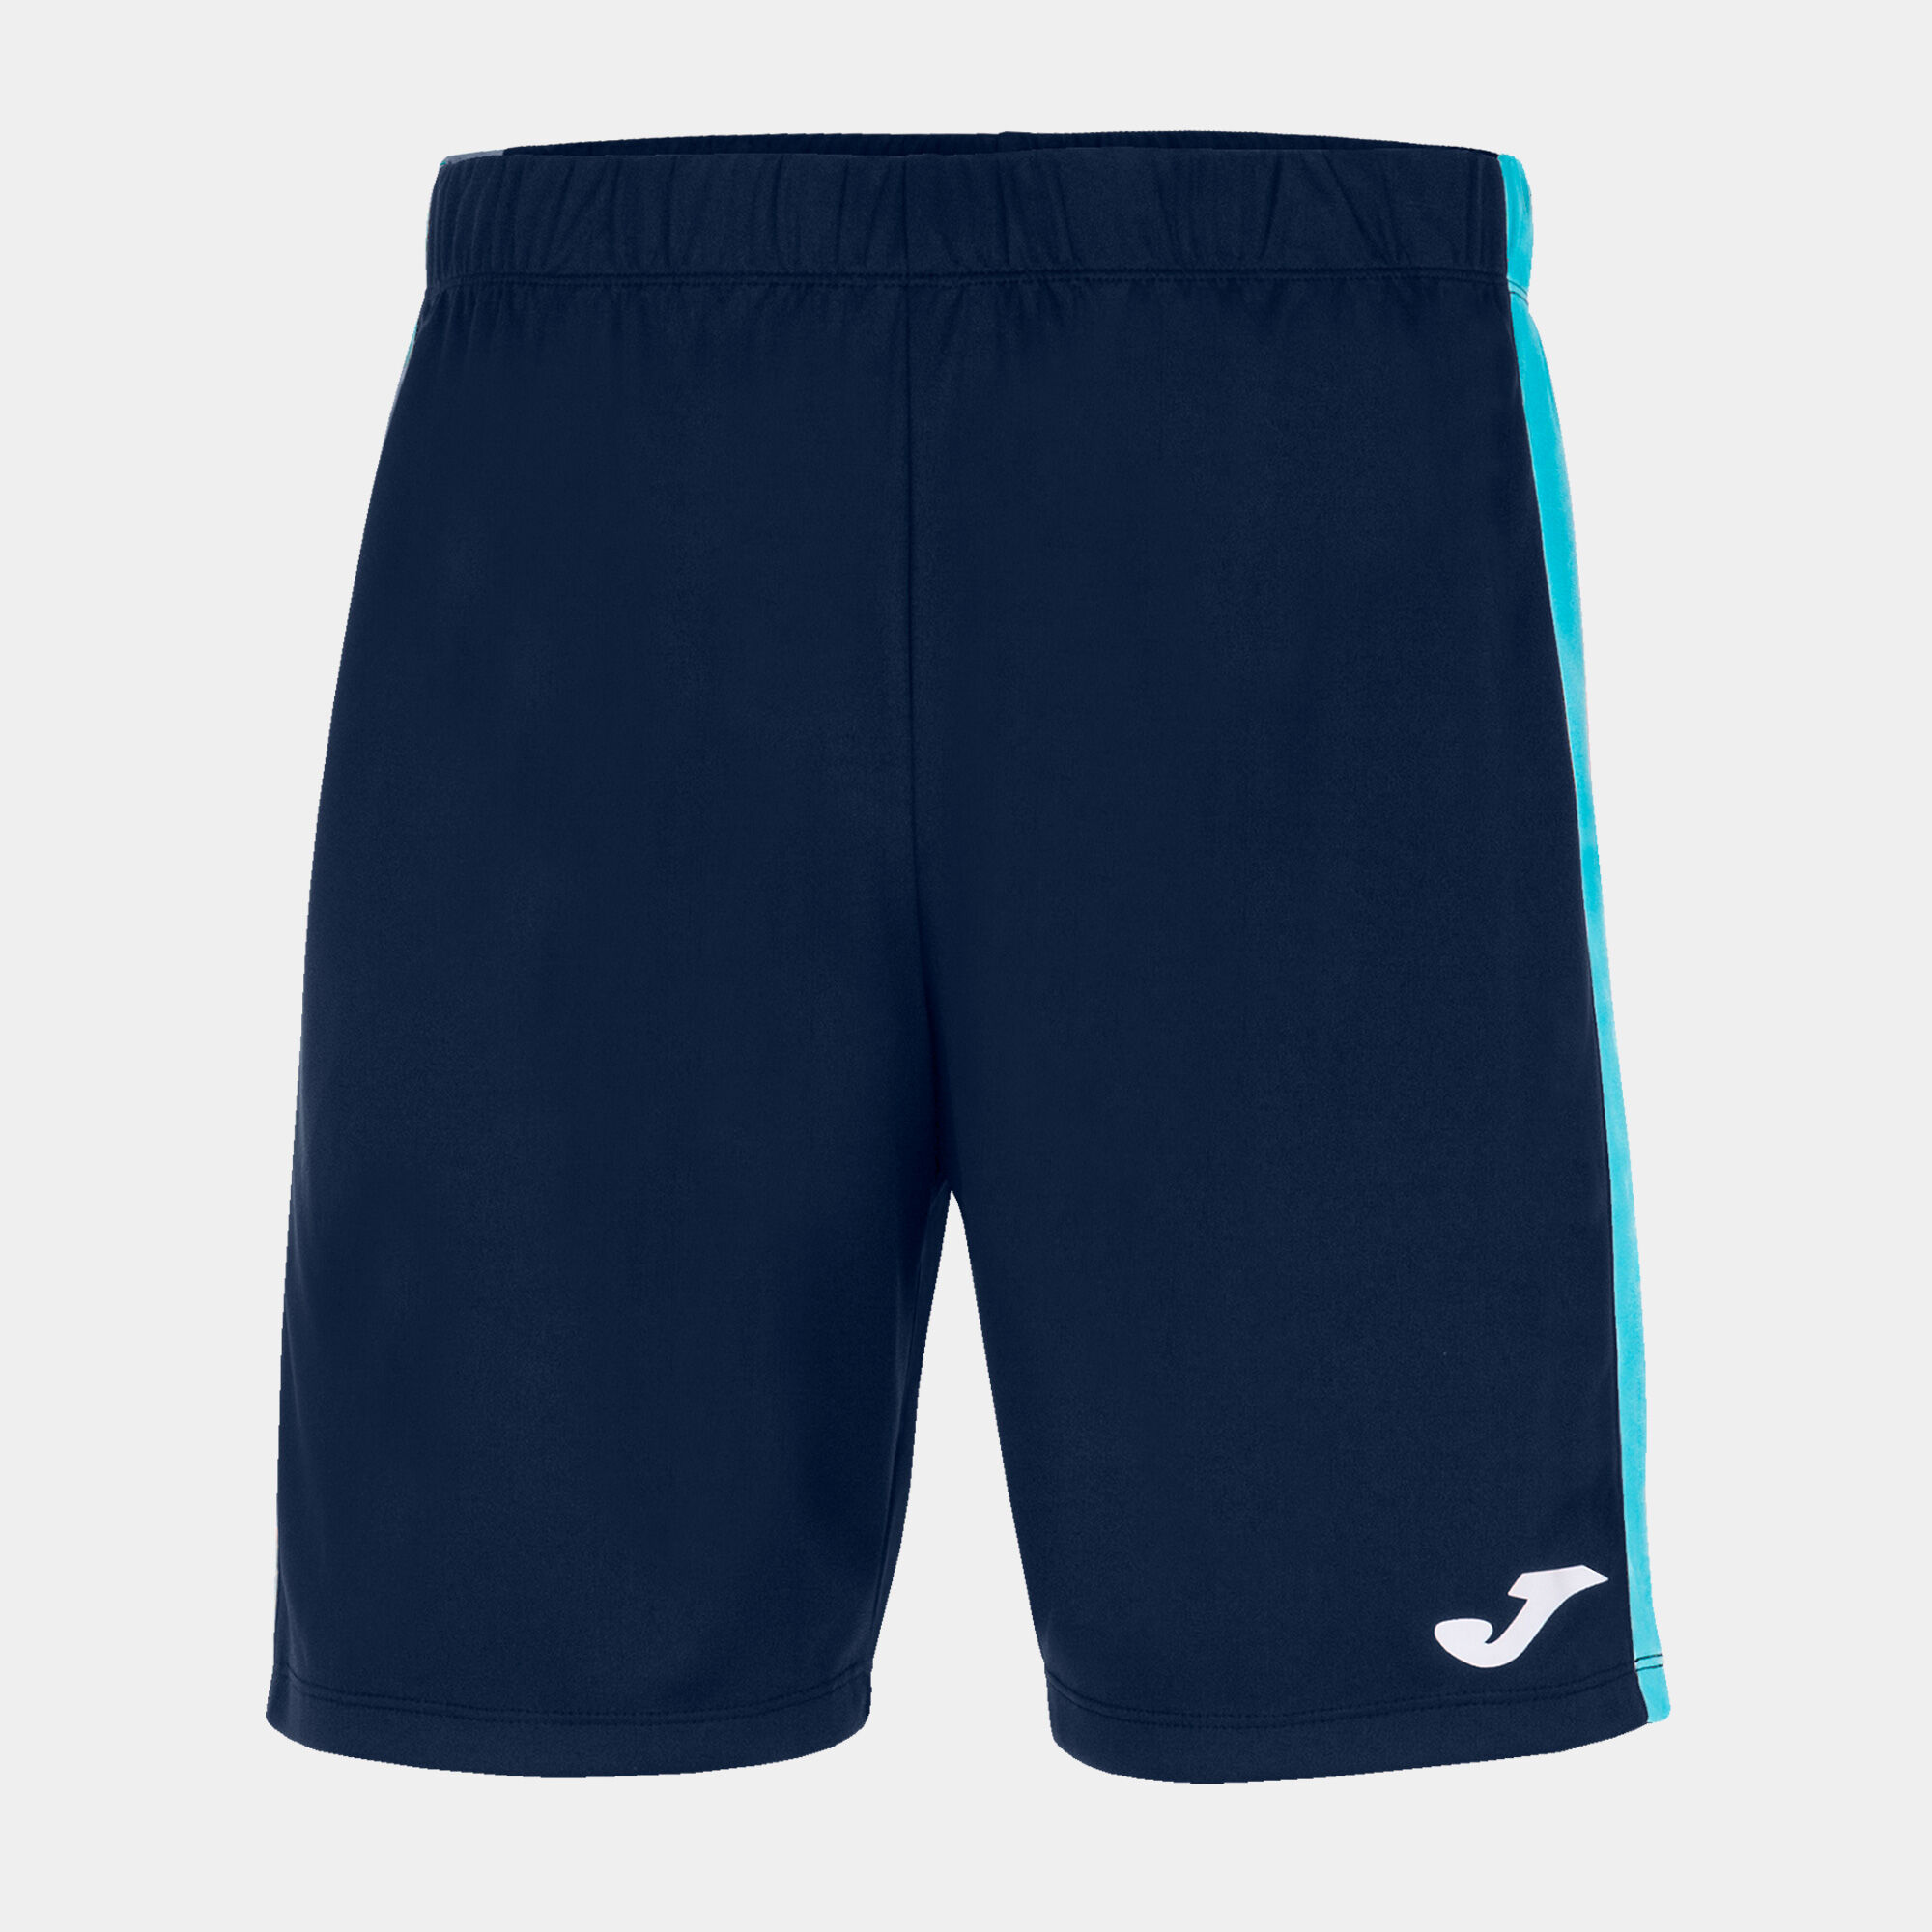 Shorts man Maxi navy blue fluorescent turquoise